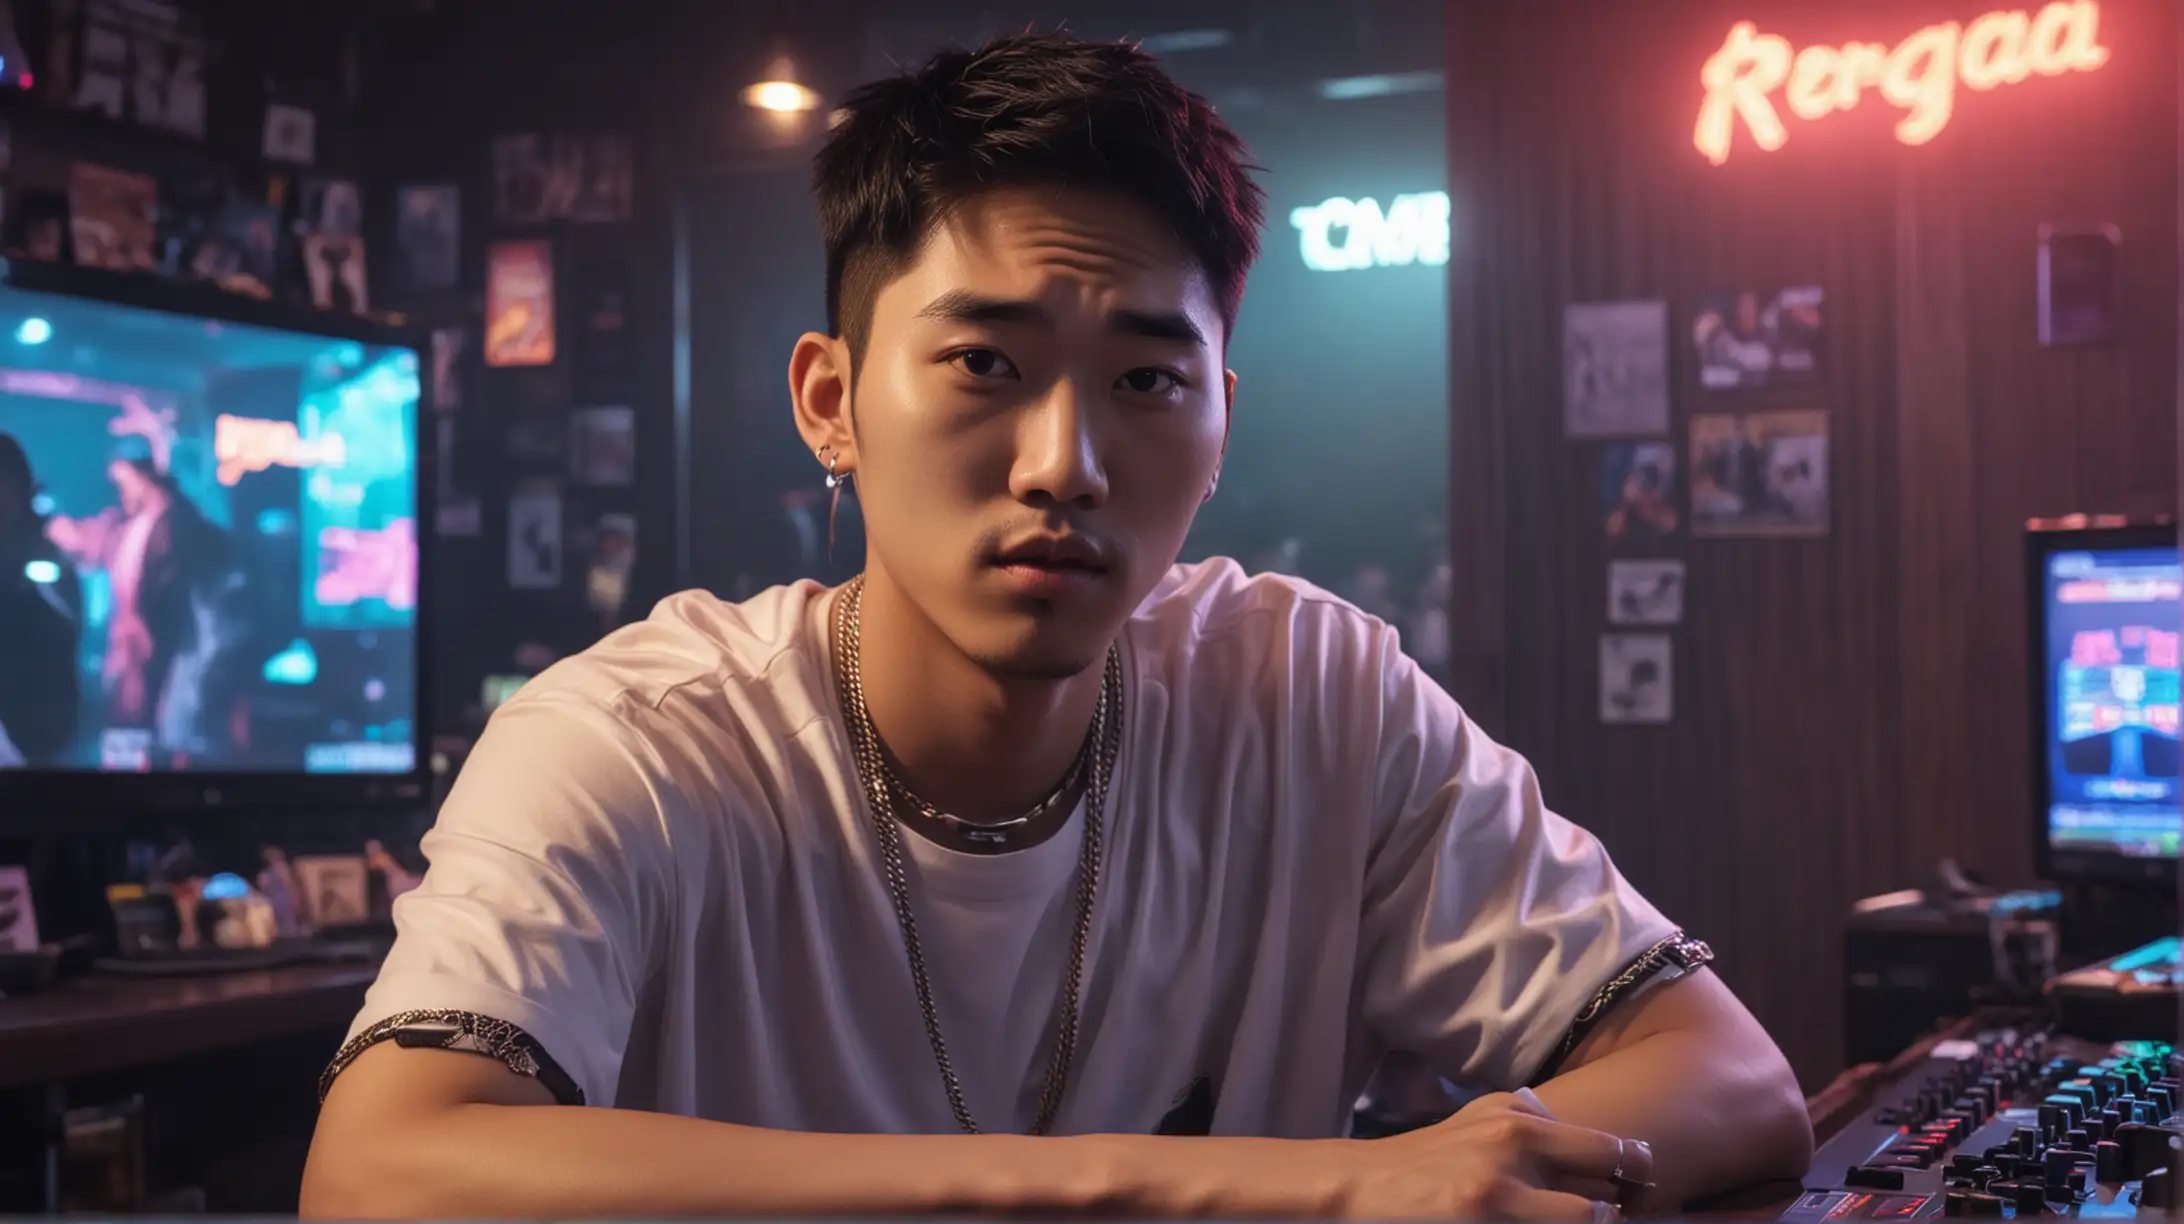 Stylish Korean HipHop Enthusiast at Urban Strip Club Desk